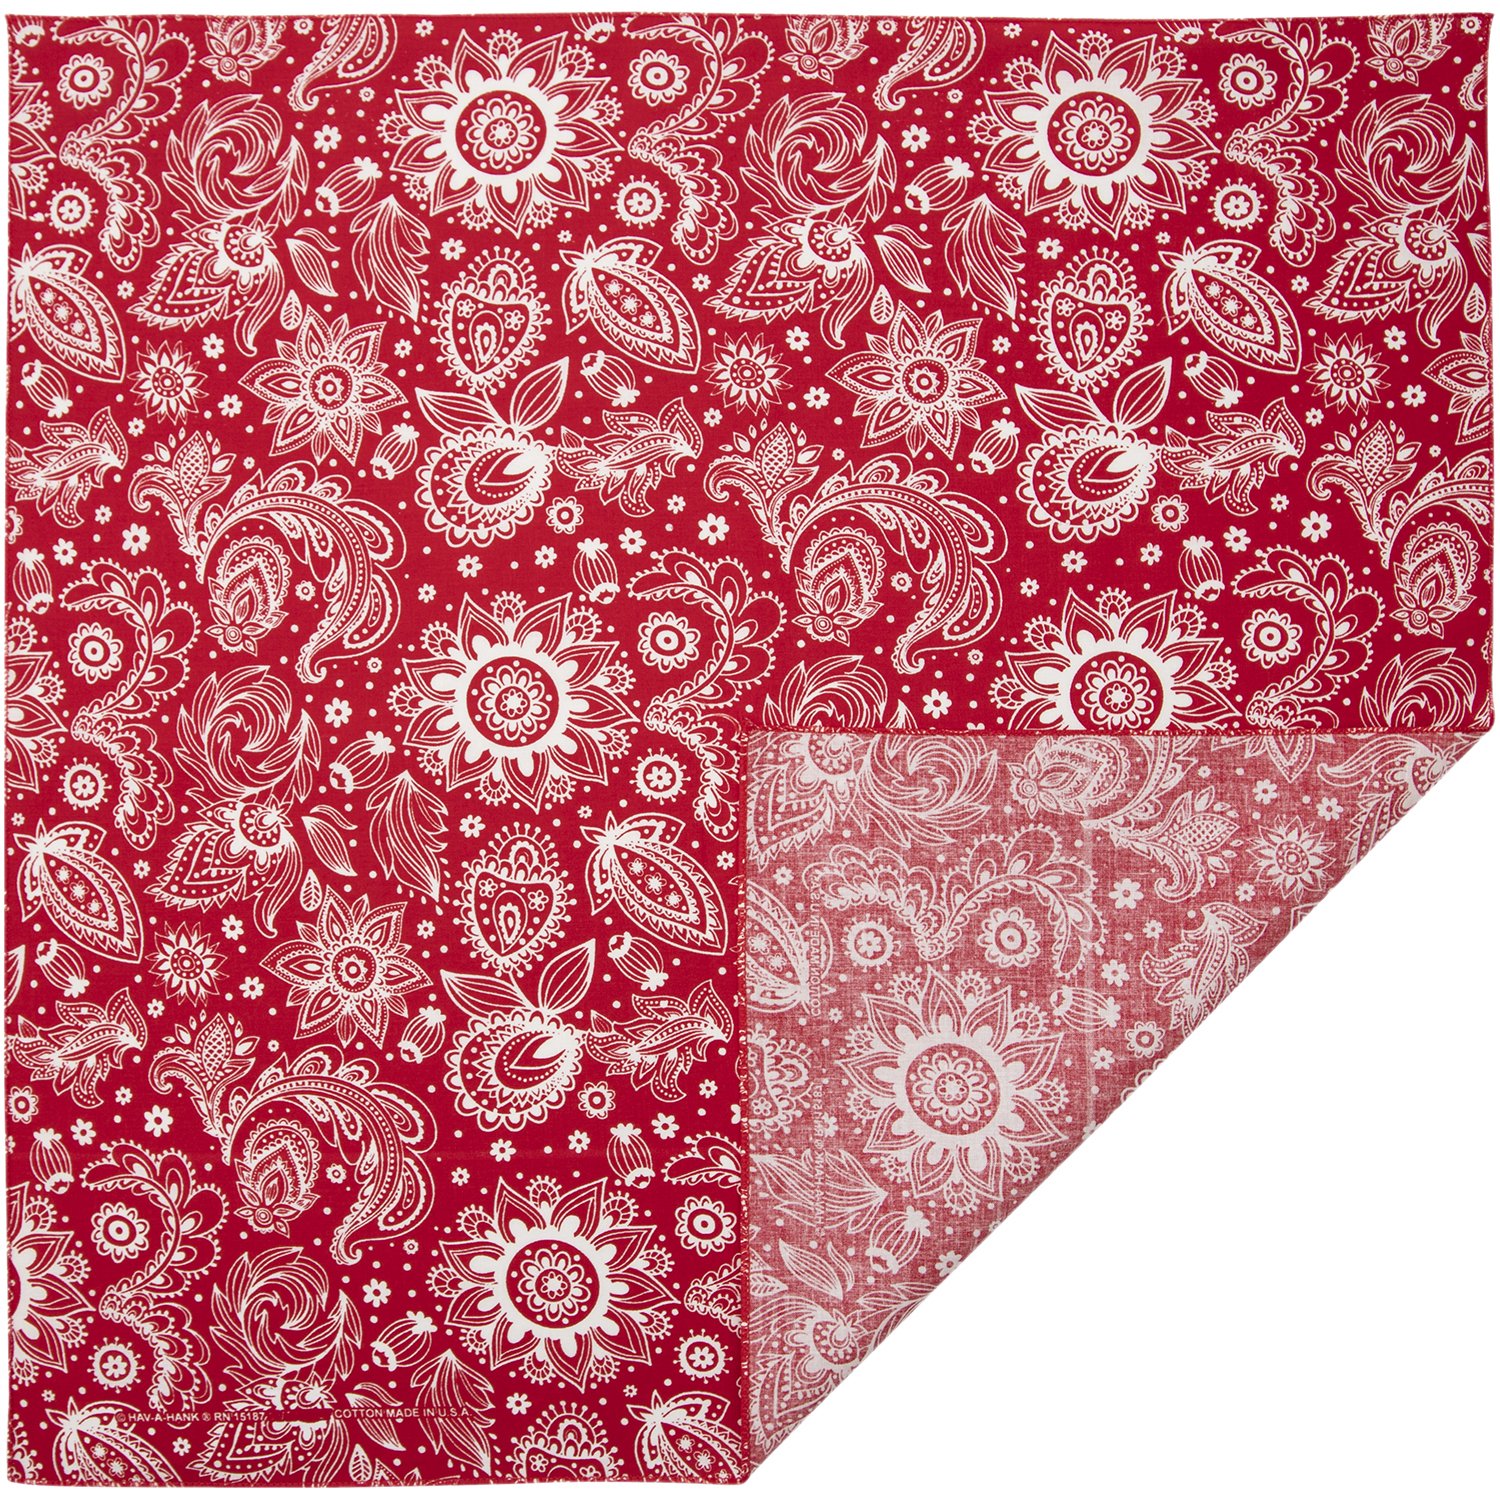 Prims Paisley Flower - Red Bandana - Single Piece - 22x22